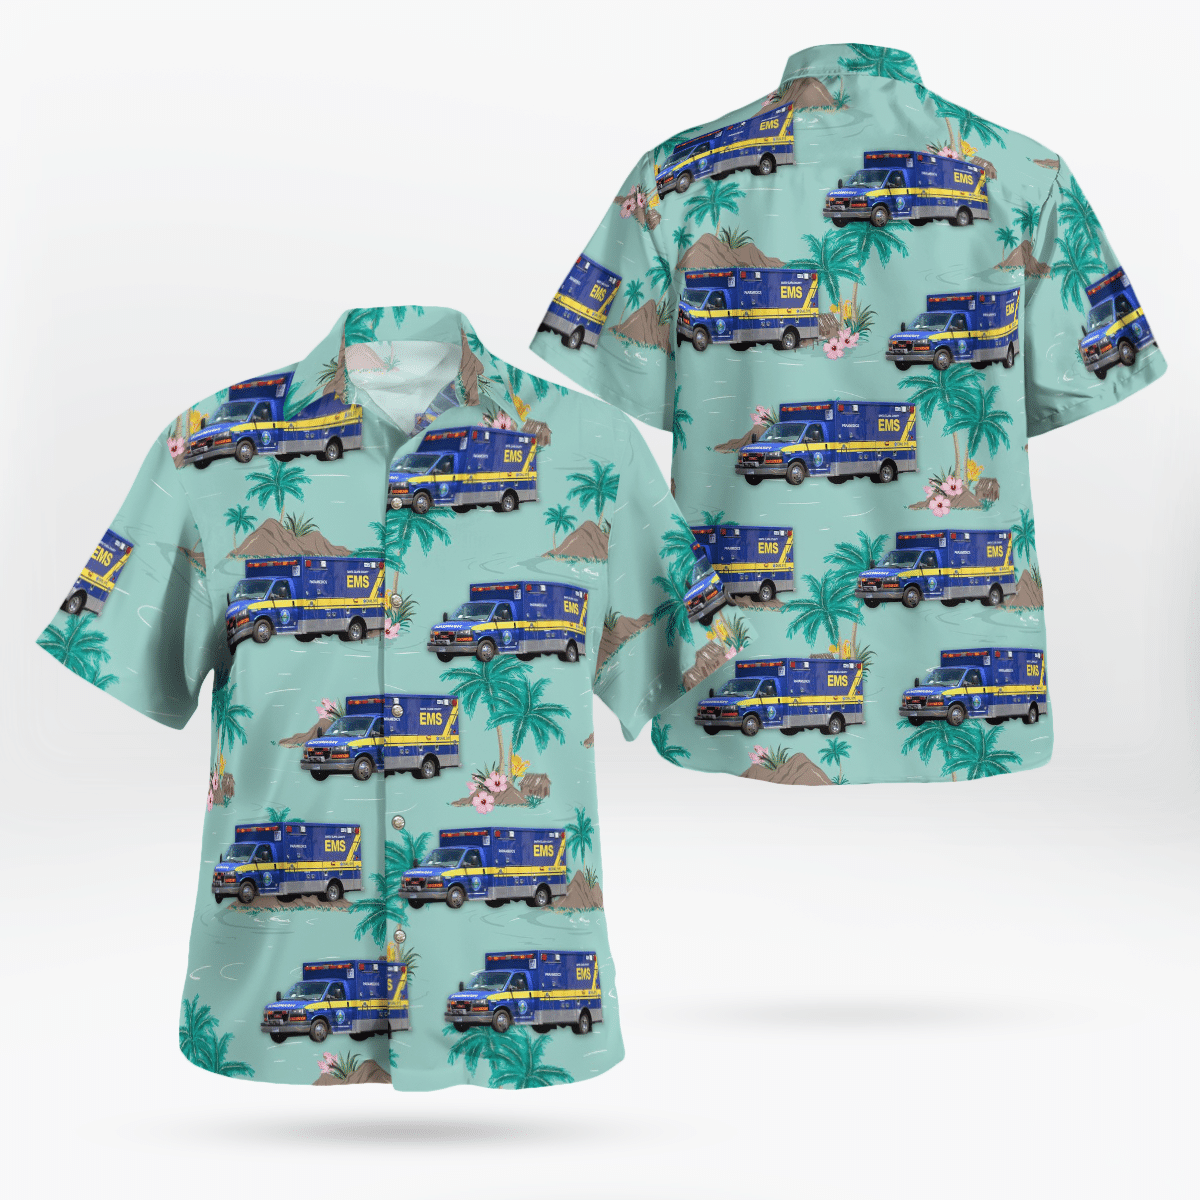 Why don't you order Hot Hawaiian Shirt today? 309